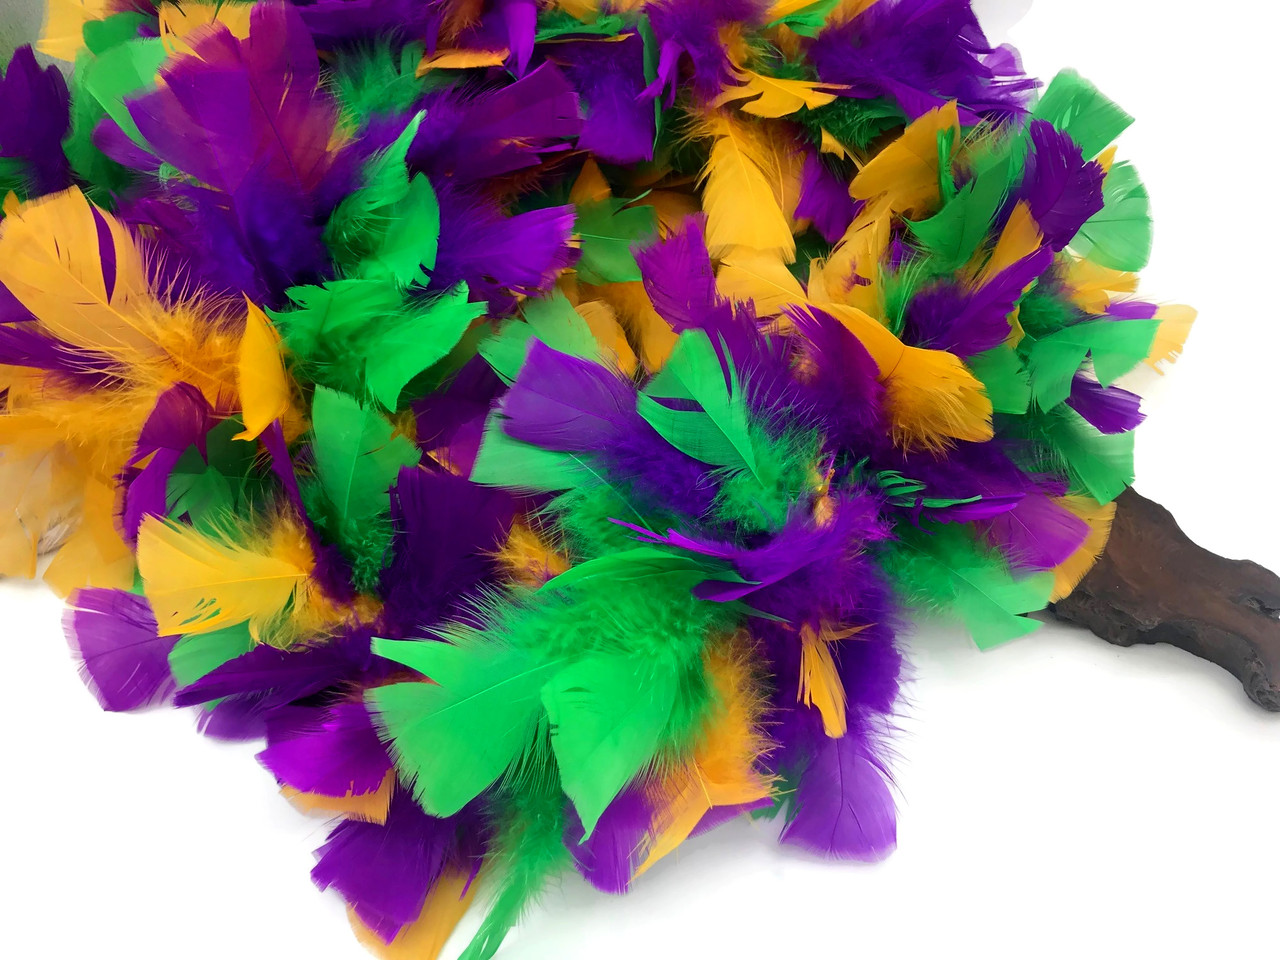 Mardi Gras A+++ Quality Turkey Plummage 3-5 Feathers Purple Green Yellow